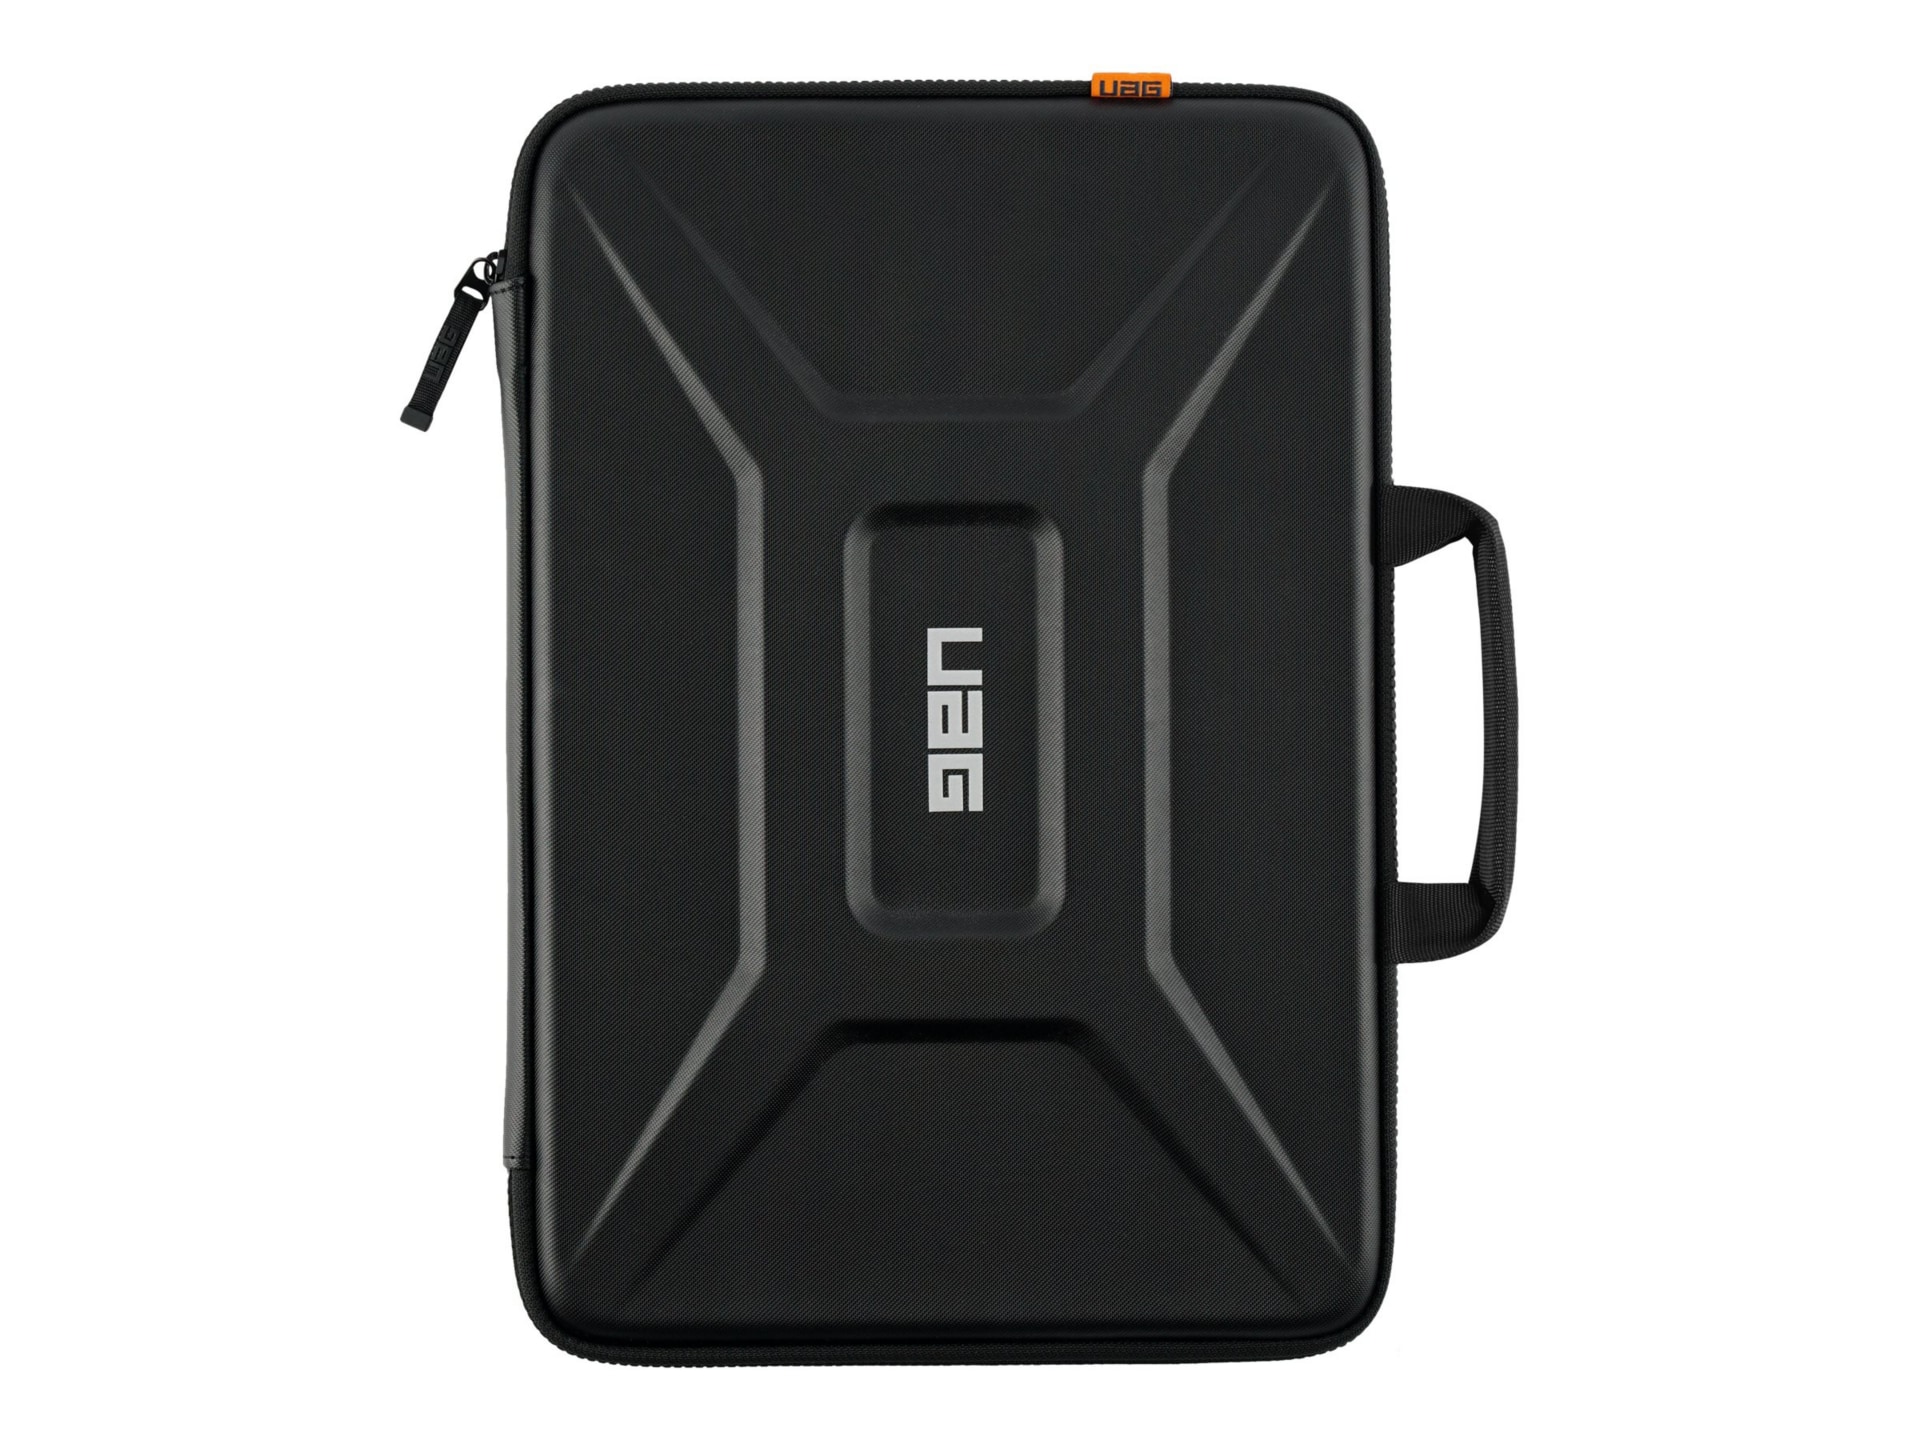 UAG Rugged Sleeve w/Handle fits 11-13" Tablets/Laptops- Black